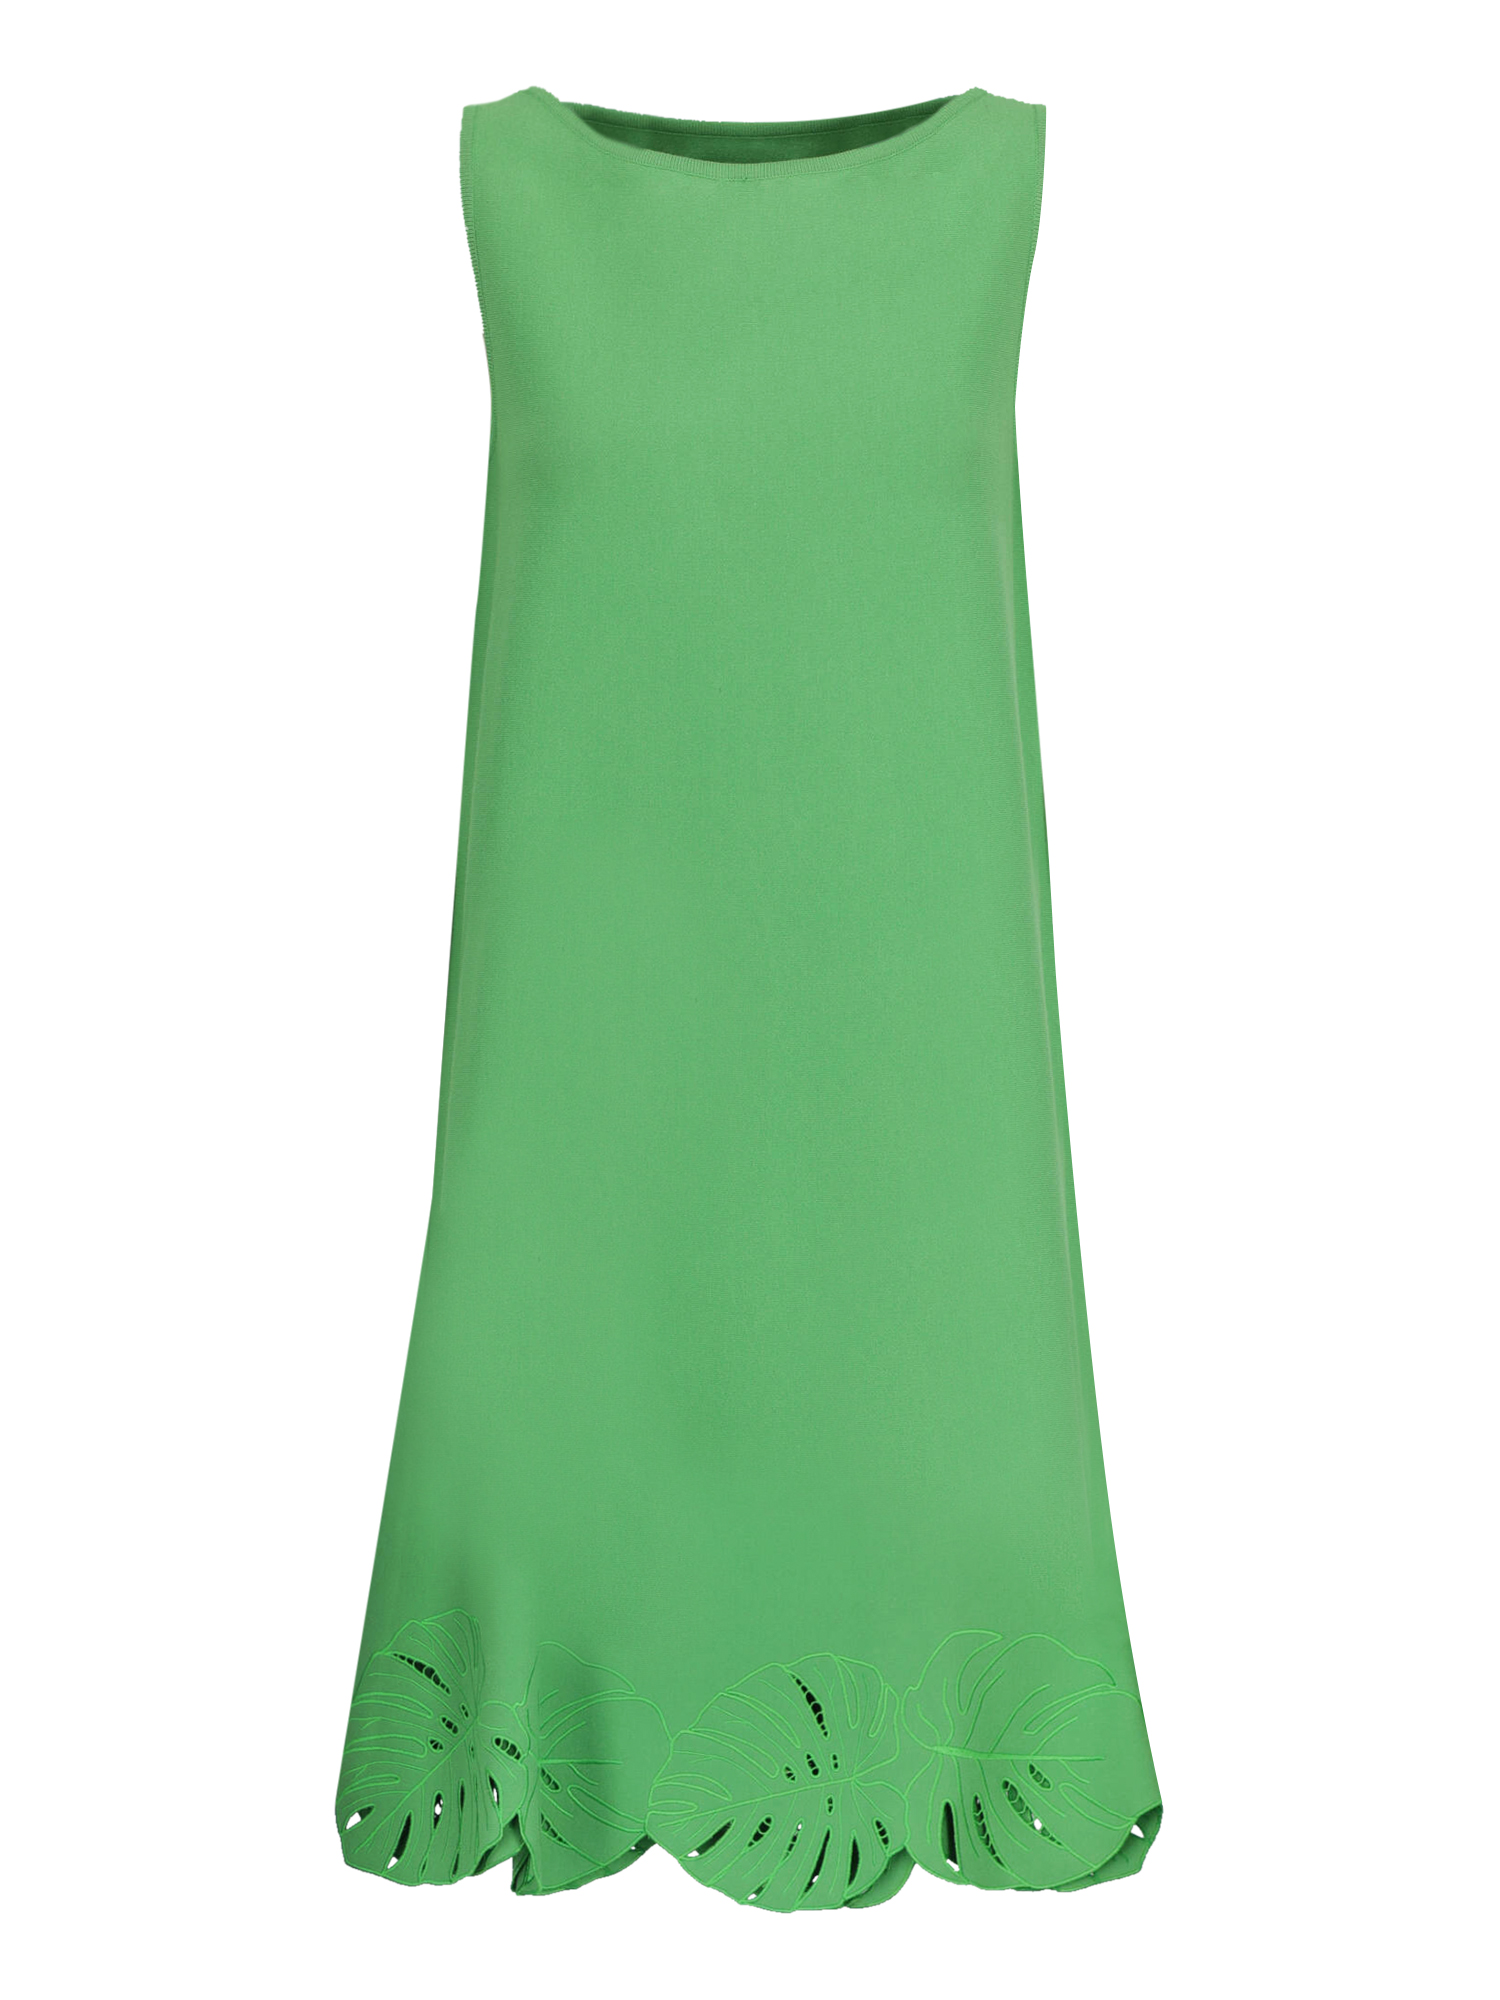 Robes Pour Femme - Oscar De La Renta - En Synthetic Fibers Green - Taille:  -